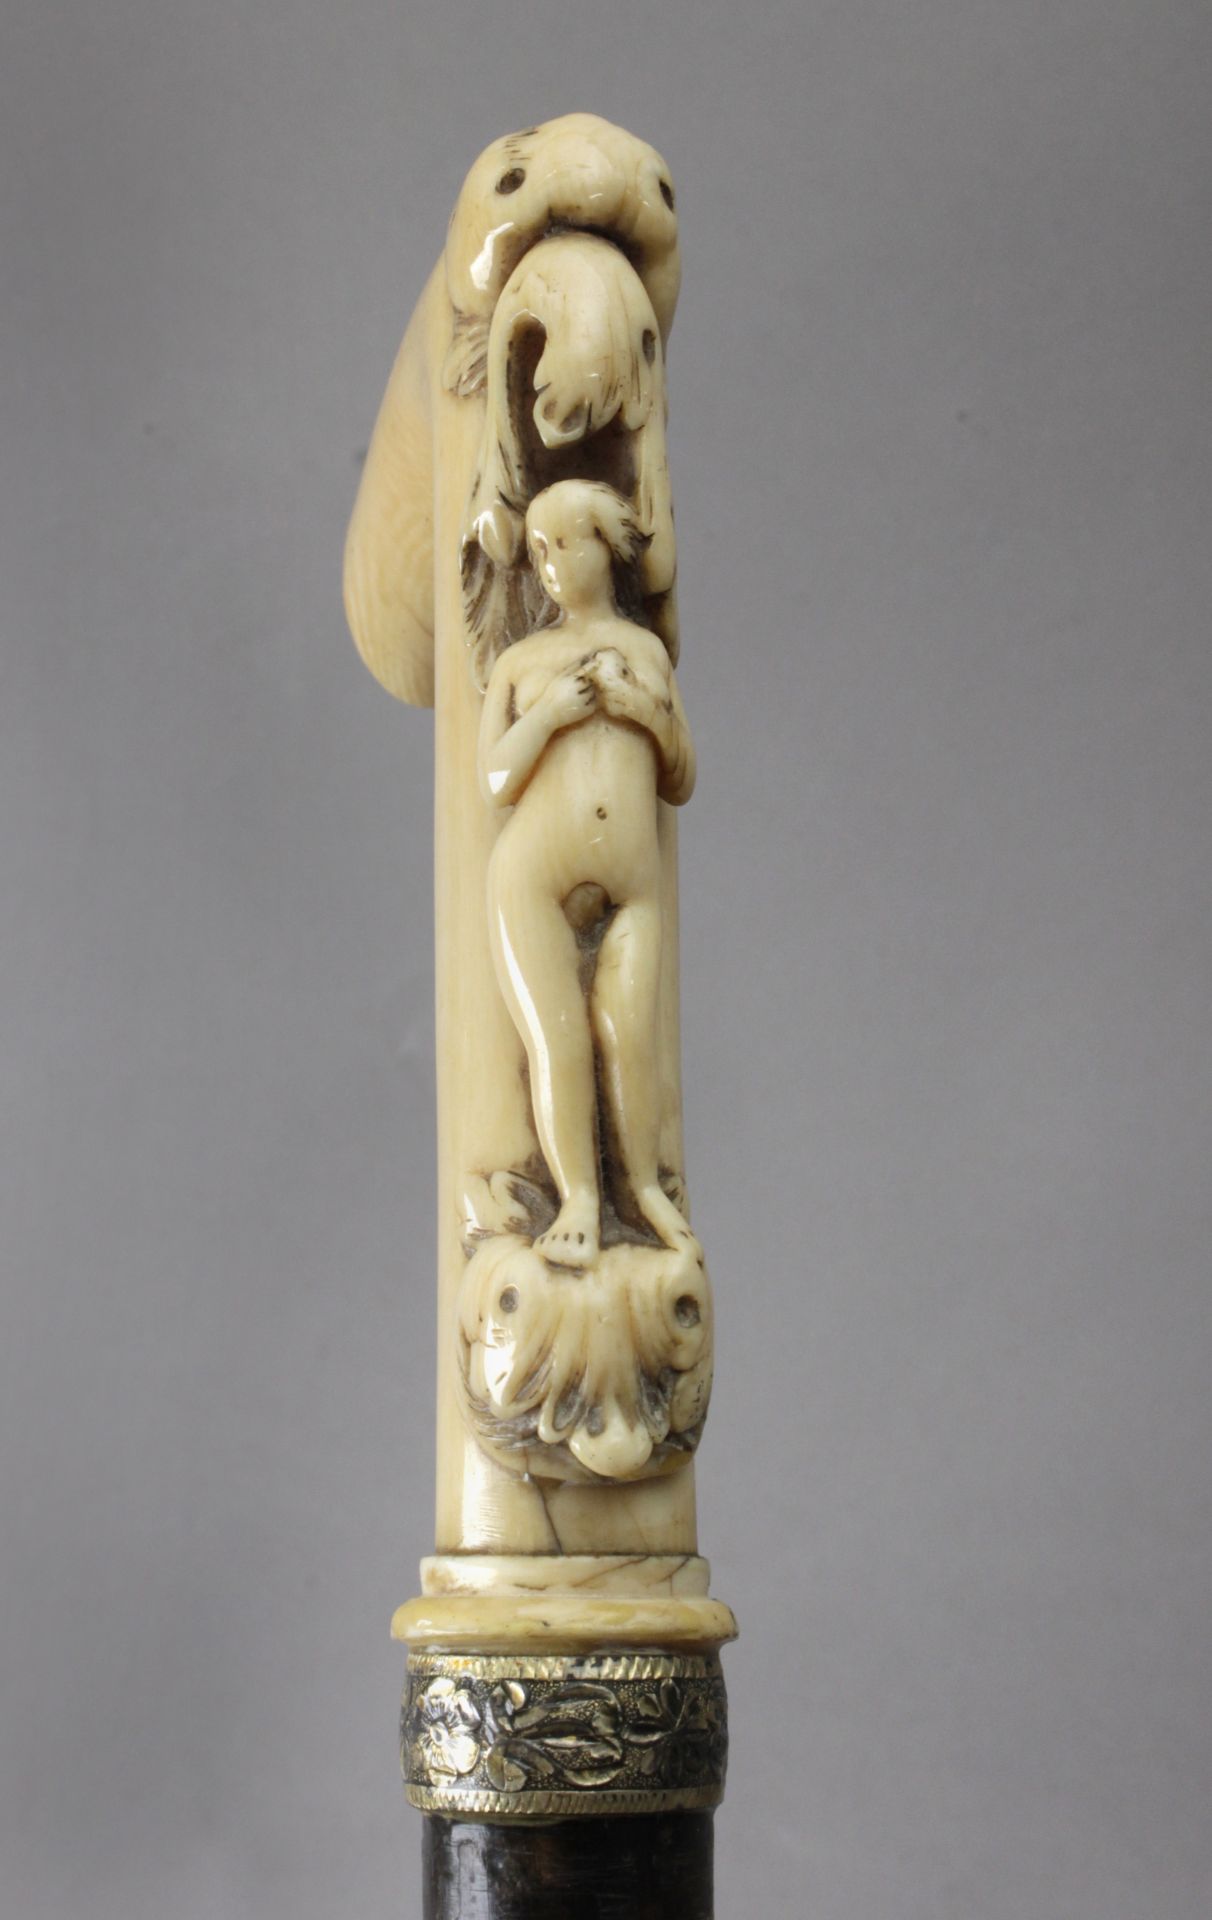 A 19th entury European ivory handled walking stick